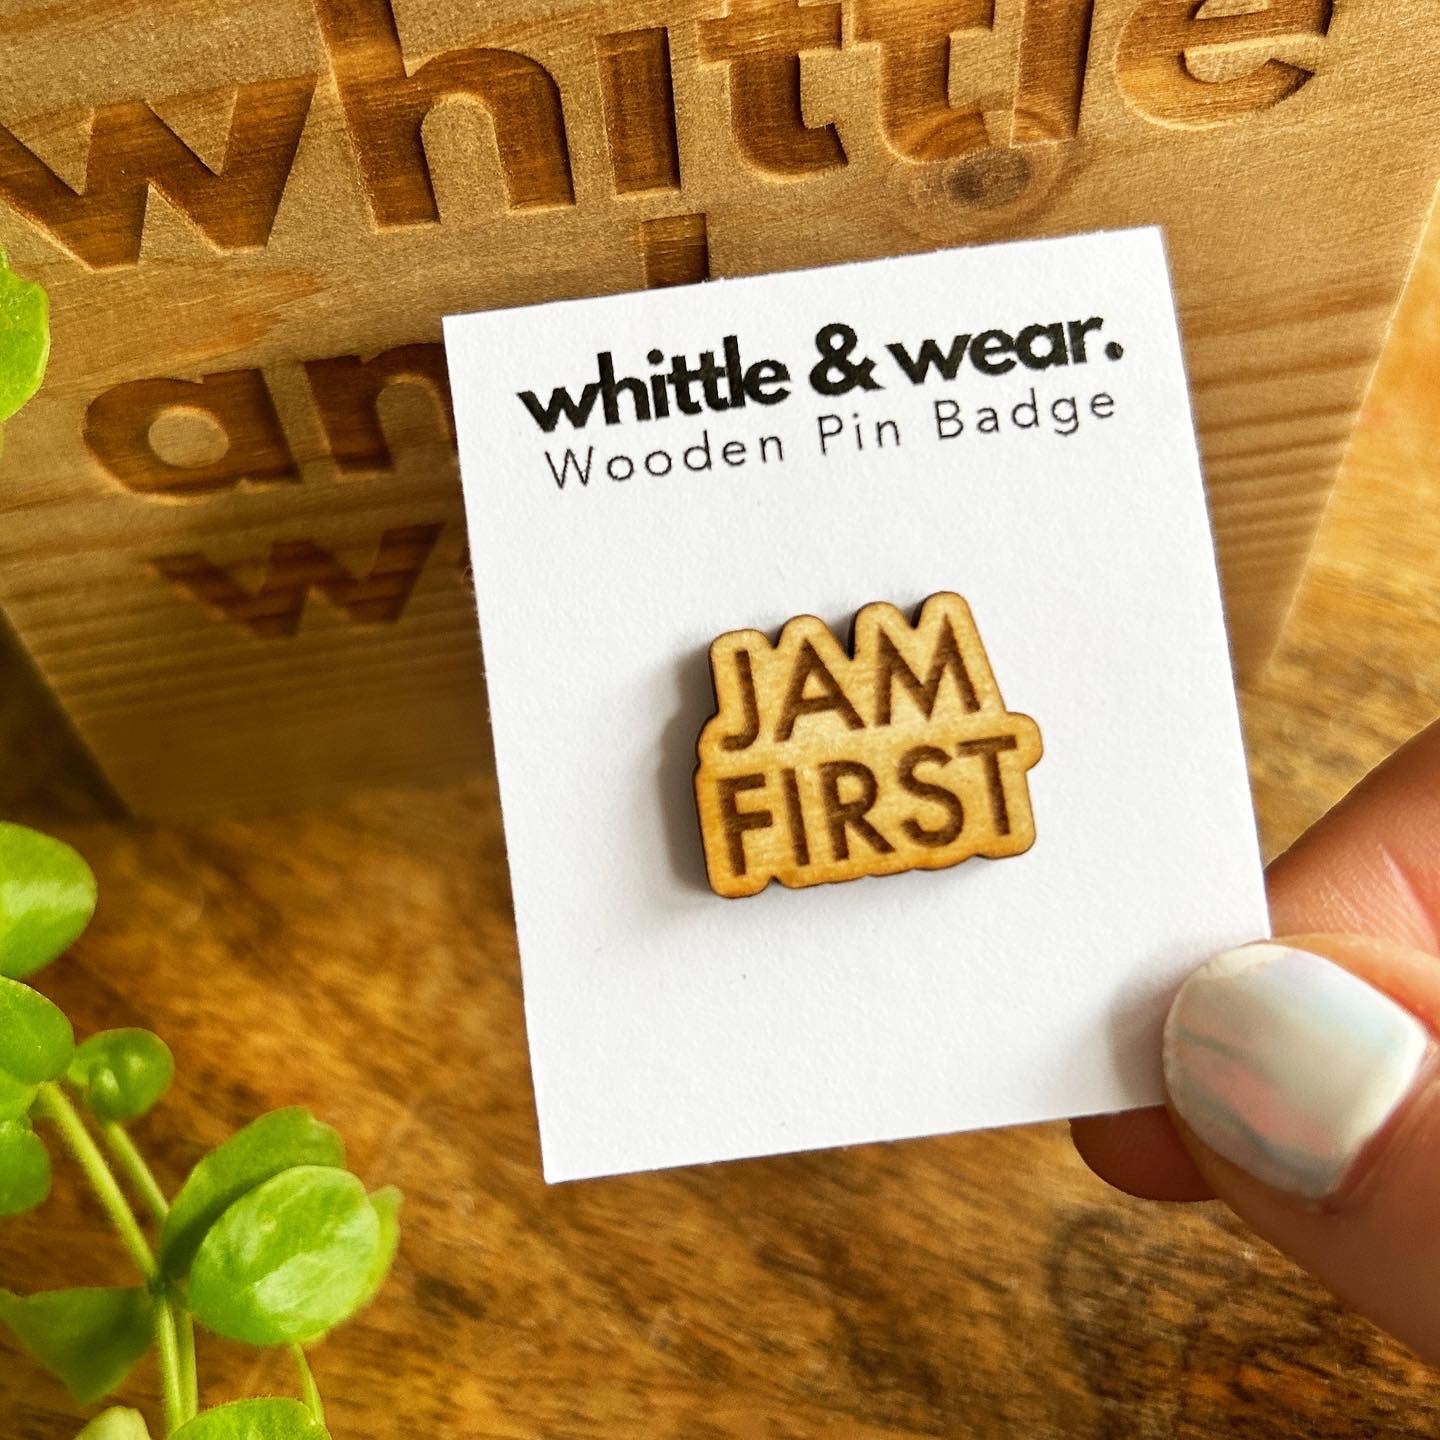 Wooden pin badge - Jam first